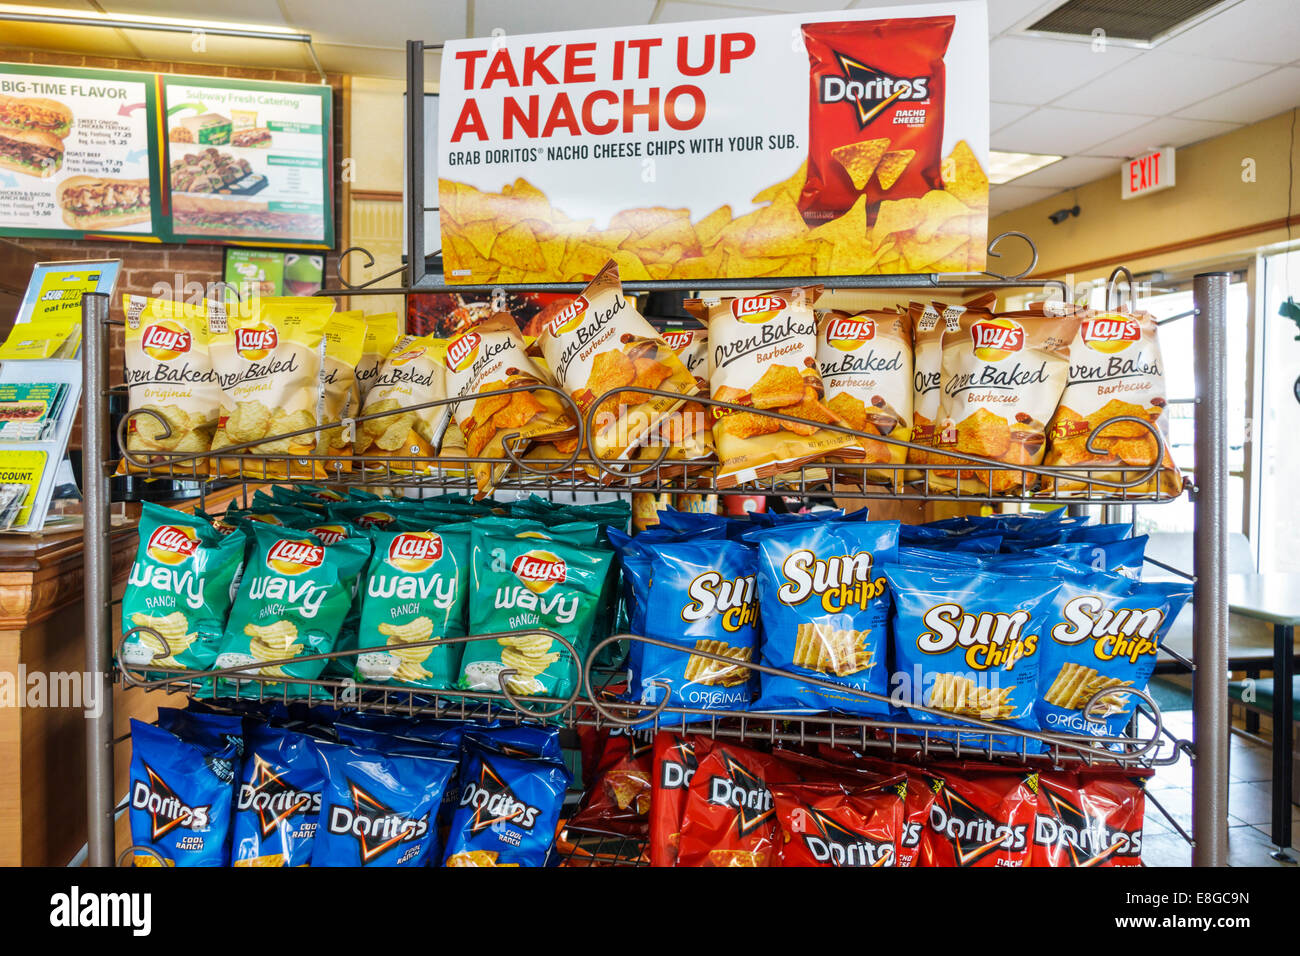 Naples Florida,subway,train,sandwich shop,bags,potato chips,display sale Doritos,Lay's,junk food,nacho,nachos,FL140430008 Stock Photo